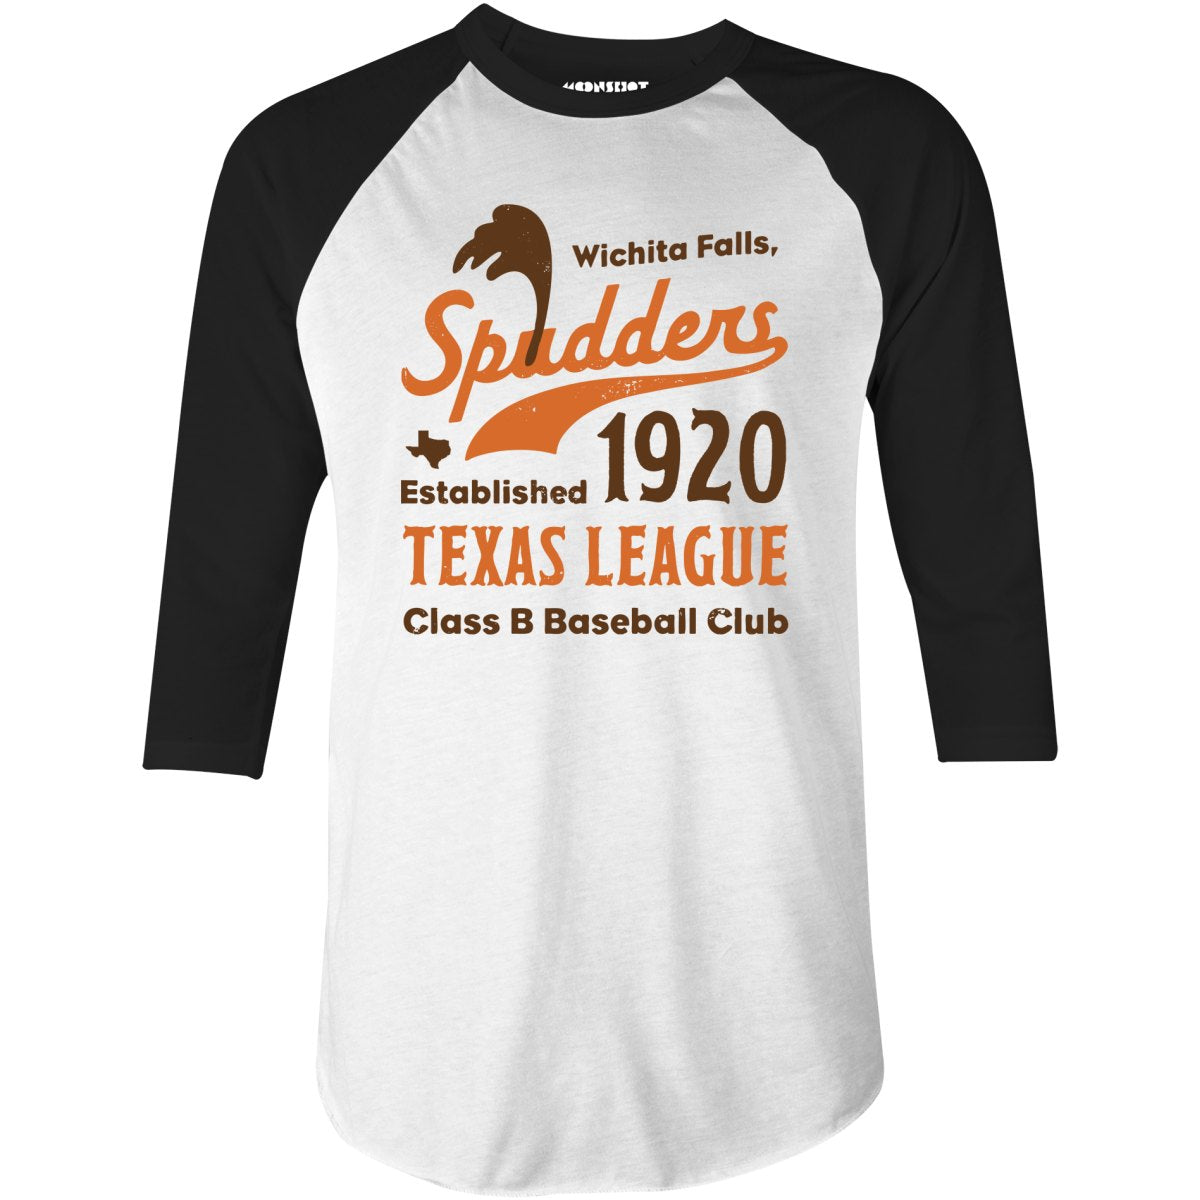 Wichita Falls Spudders - Texas - Vintage Defunct Baseball Teams - 3/4 Sleeve Raglan T-Shirt